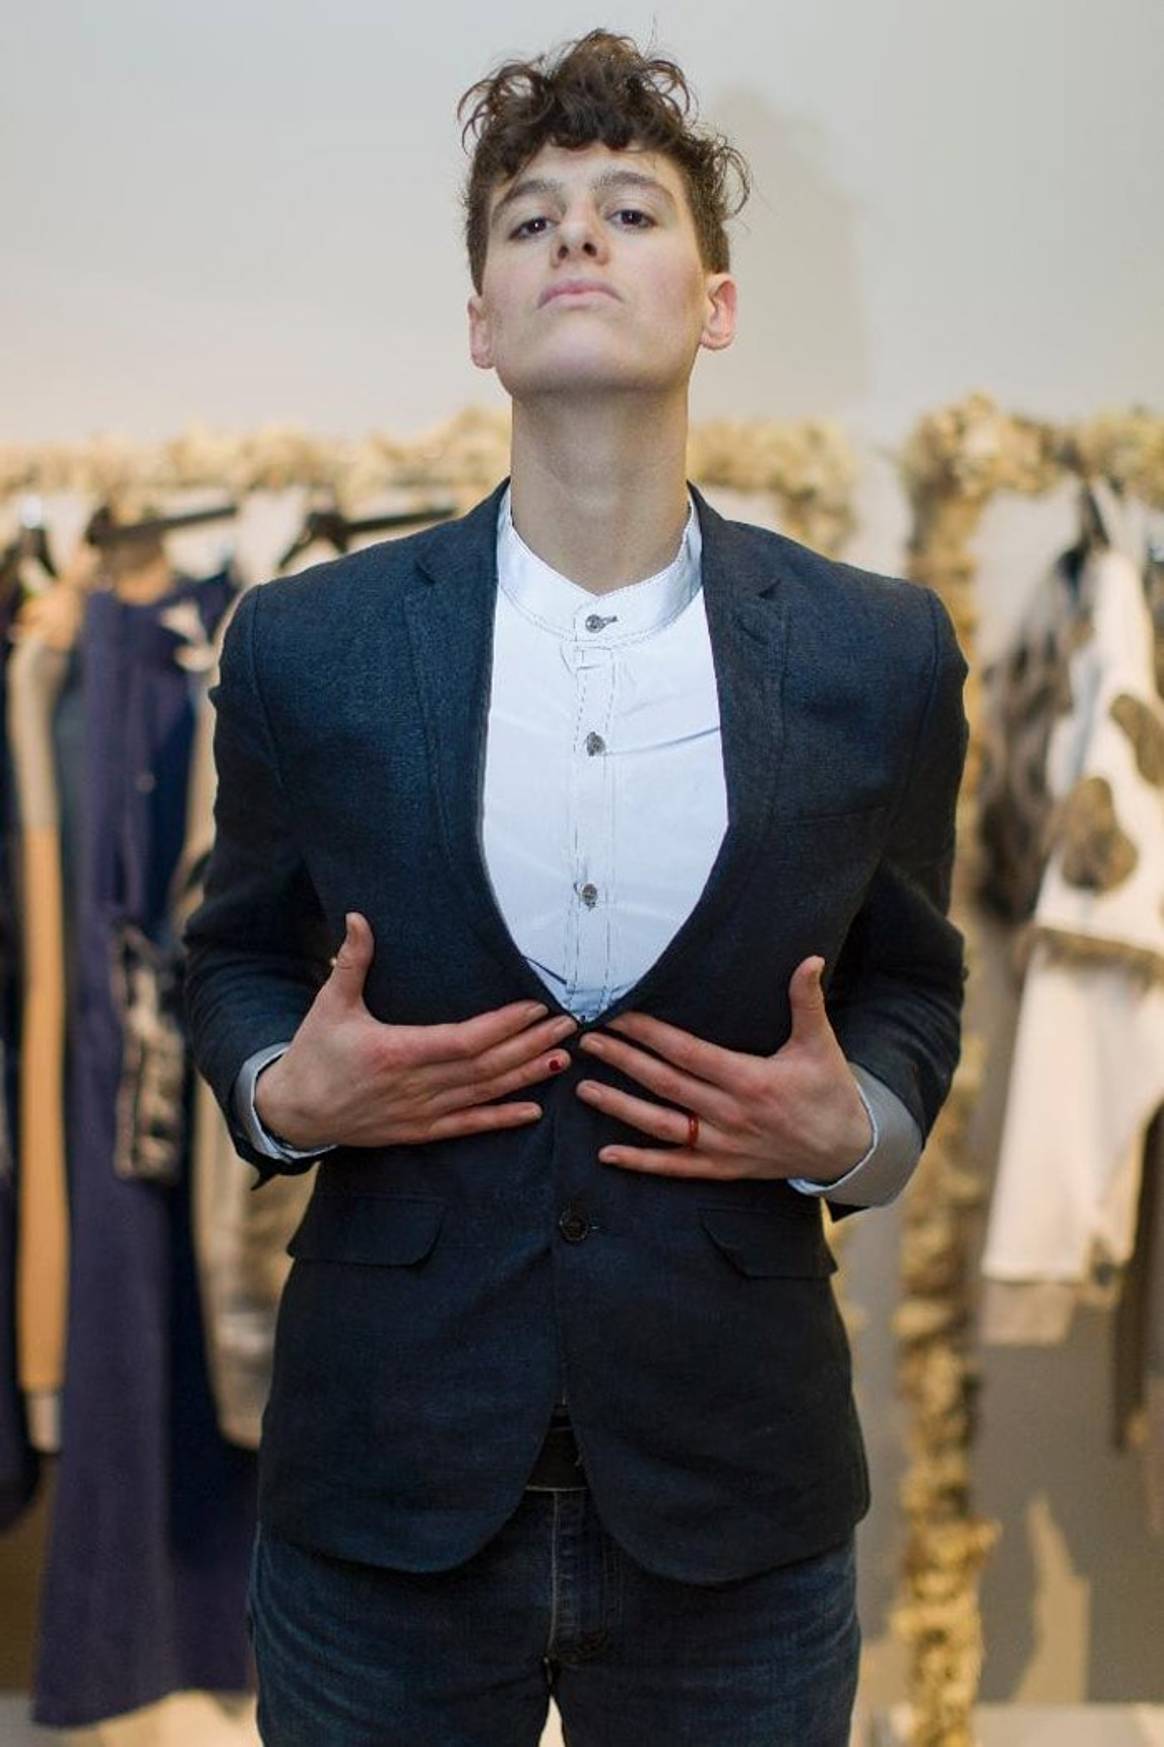 Genderless fashion blurs lines on catwalks at London Fashion Week